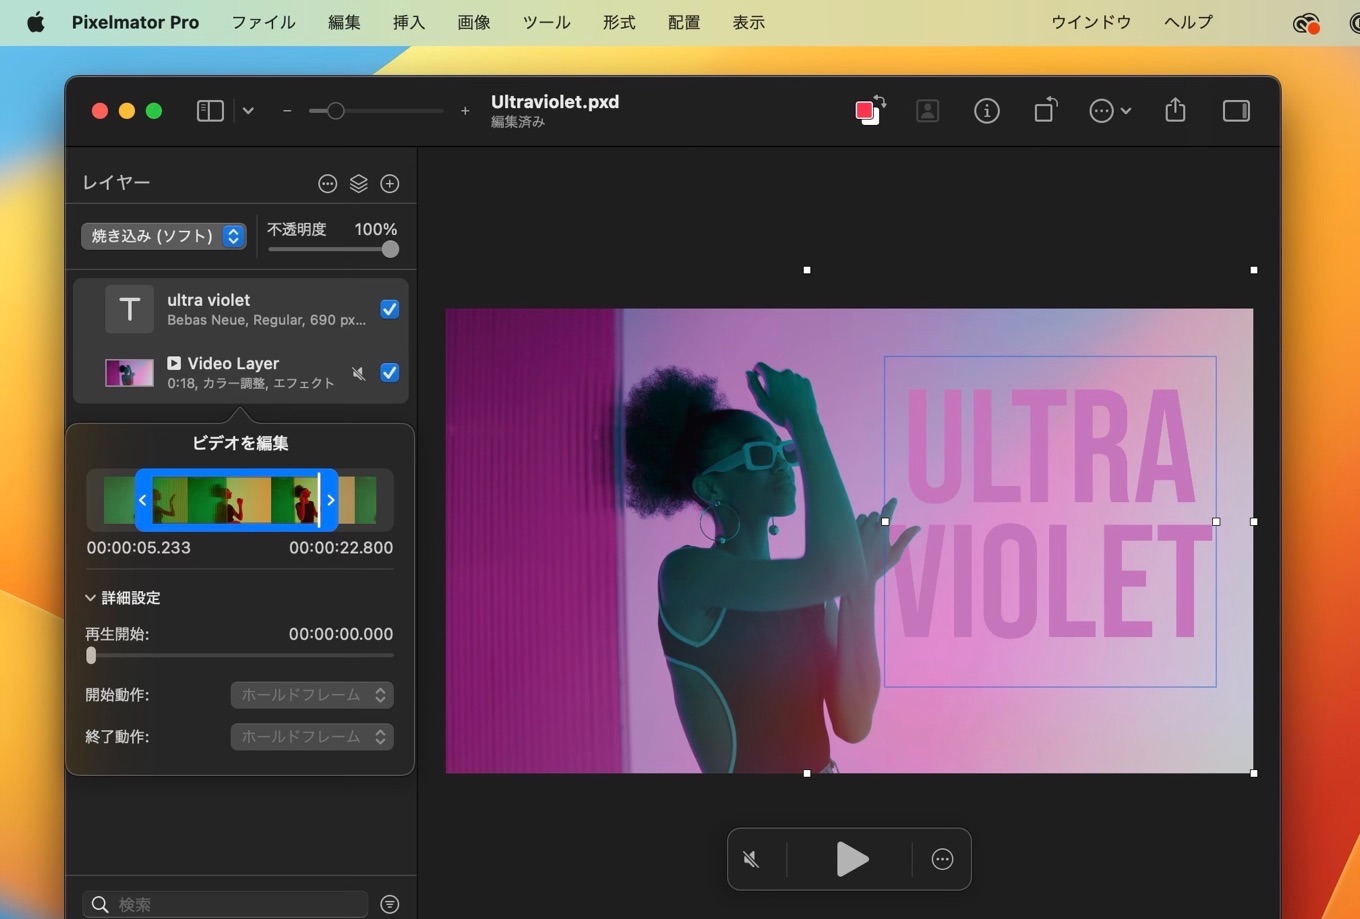 Pixelmator Pro Video Layer editing